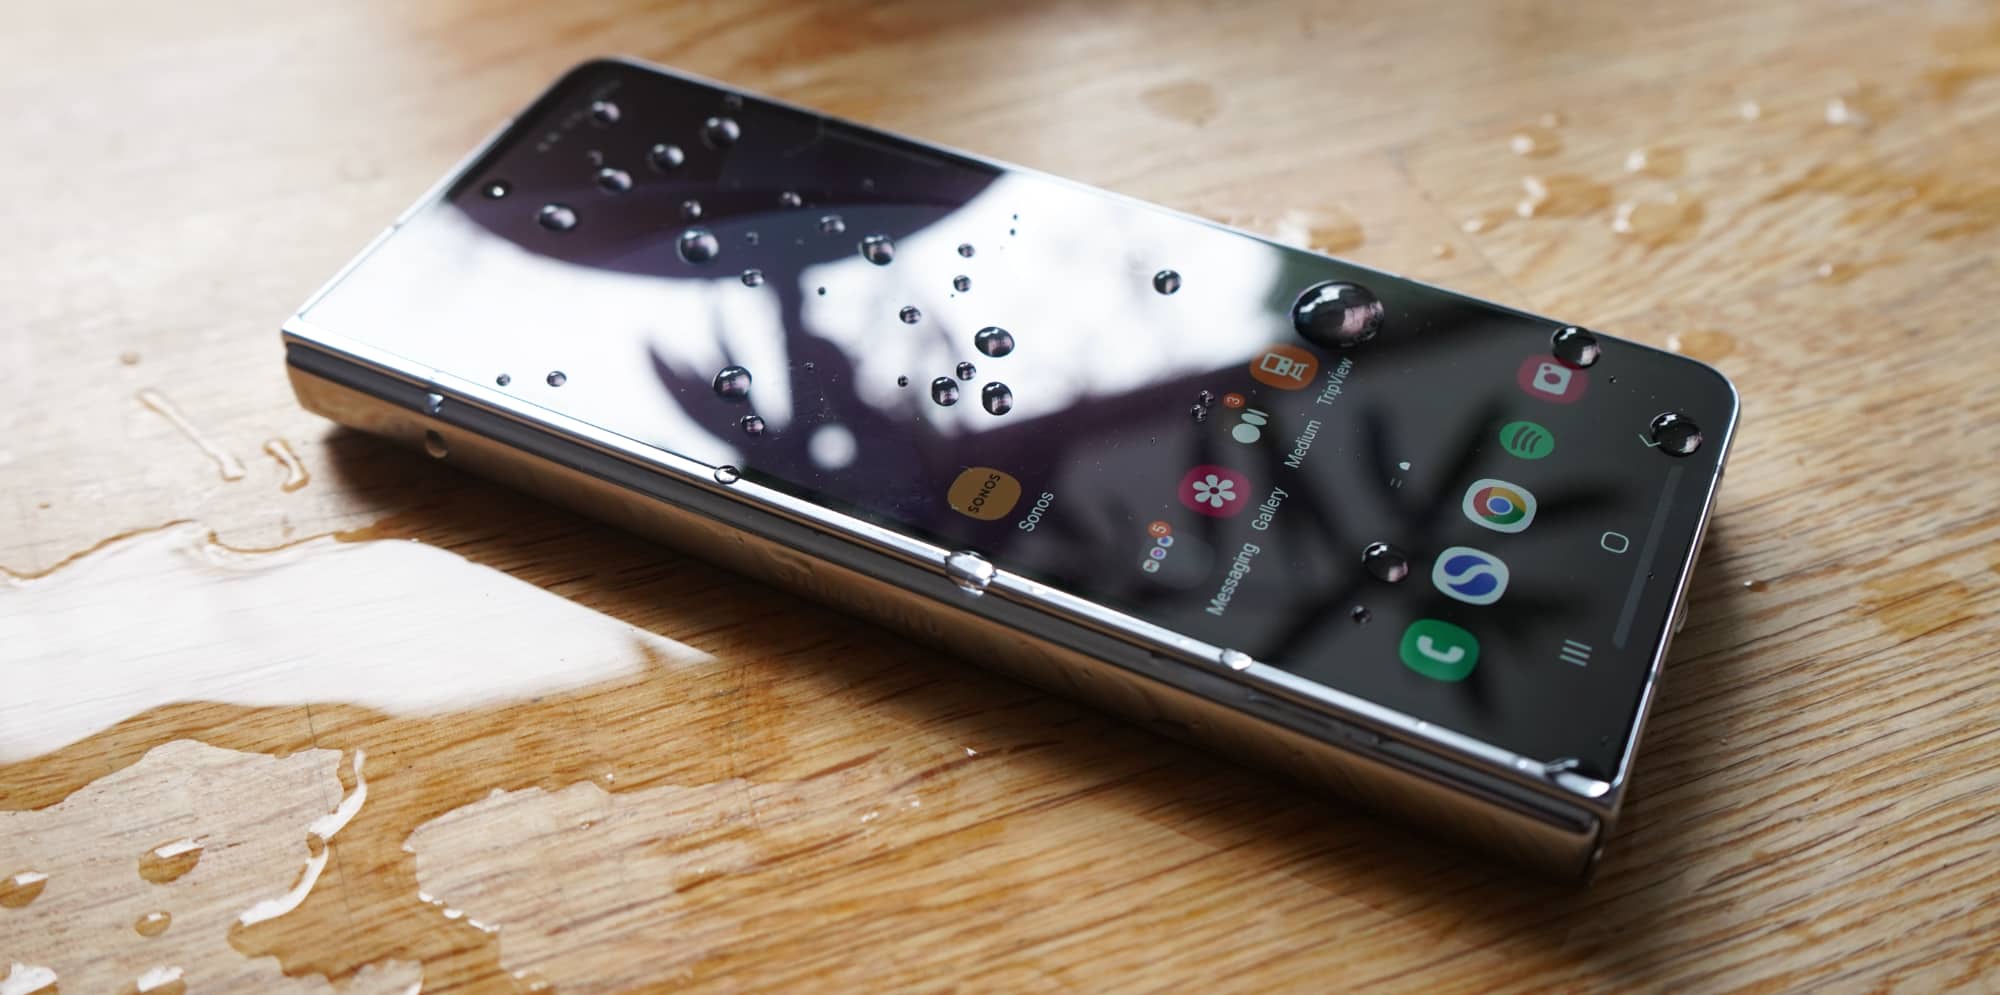 Samsung's Galaxy Z Fold 5 Still Doesn't Have S Pen Storage: Here's